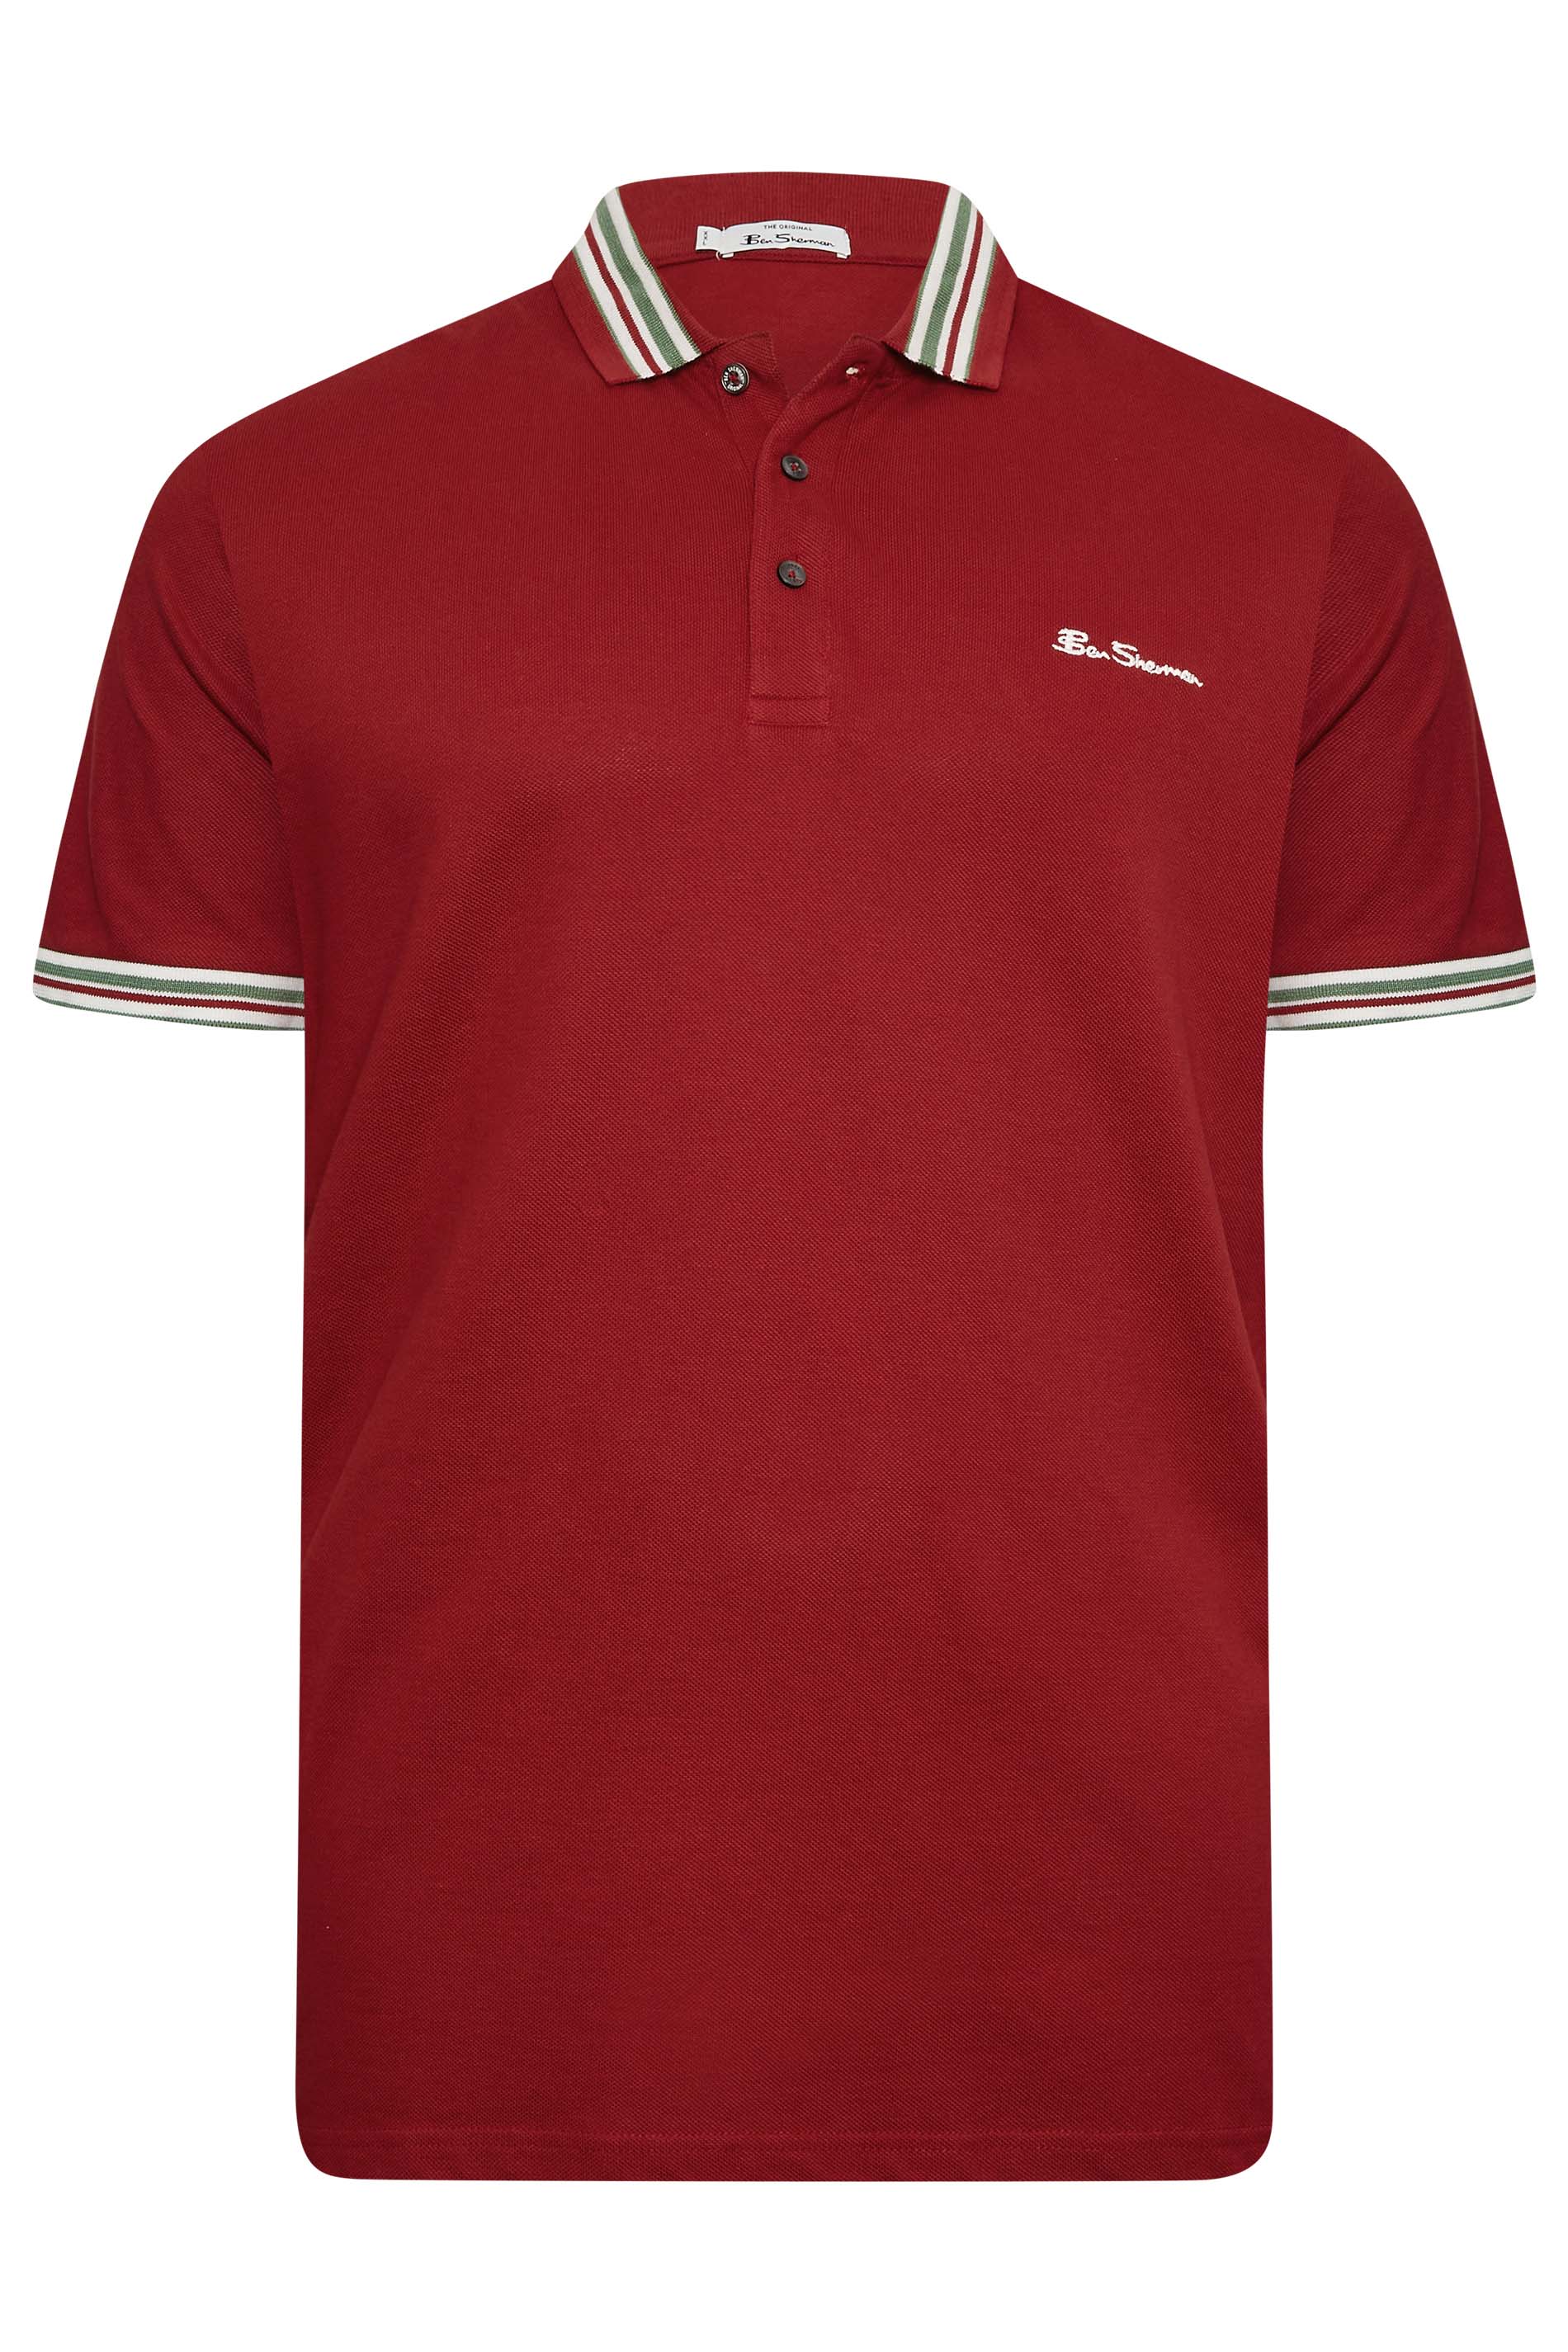 BEN SHERMAN Big & Tall Burgundy Red Stripe Tipped Polo Shirt | BadRhino 3